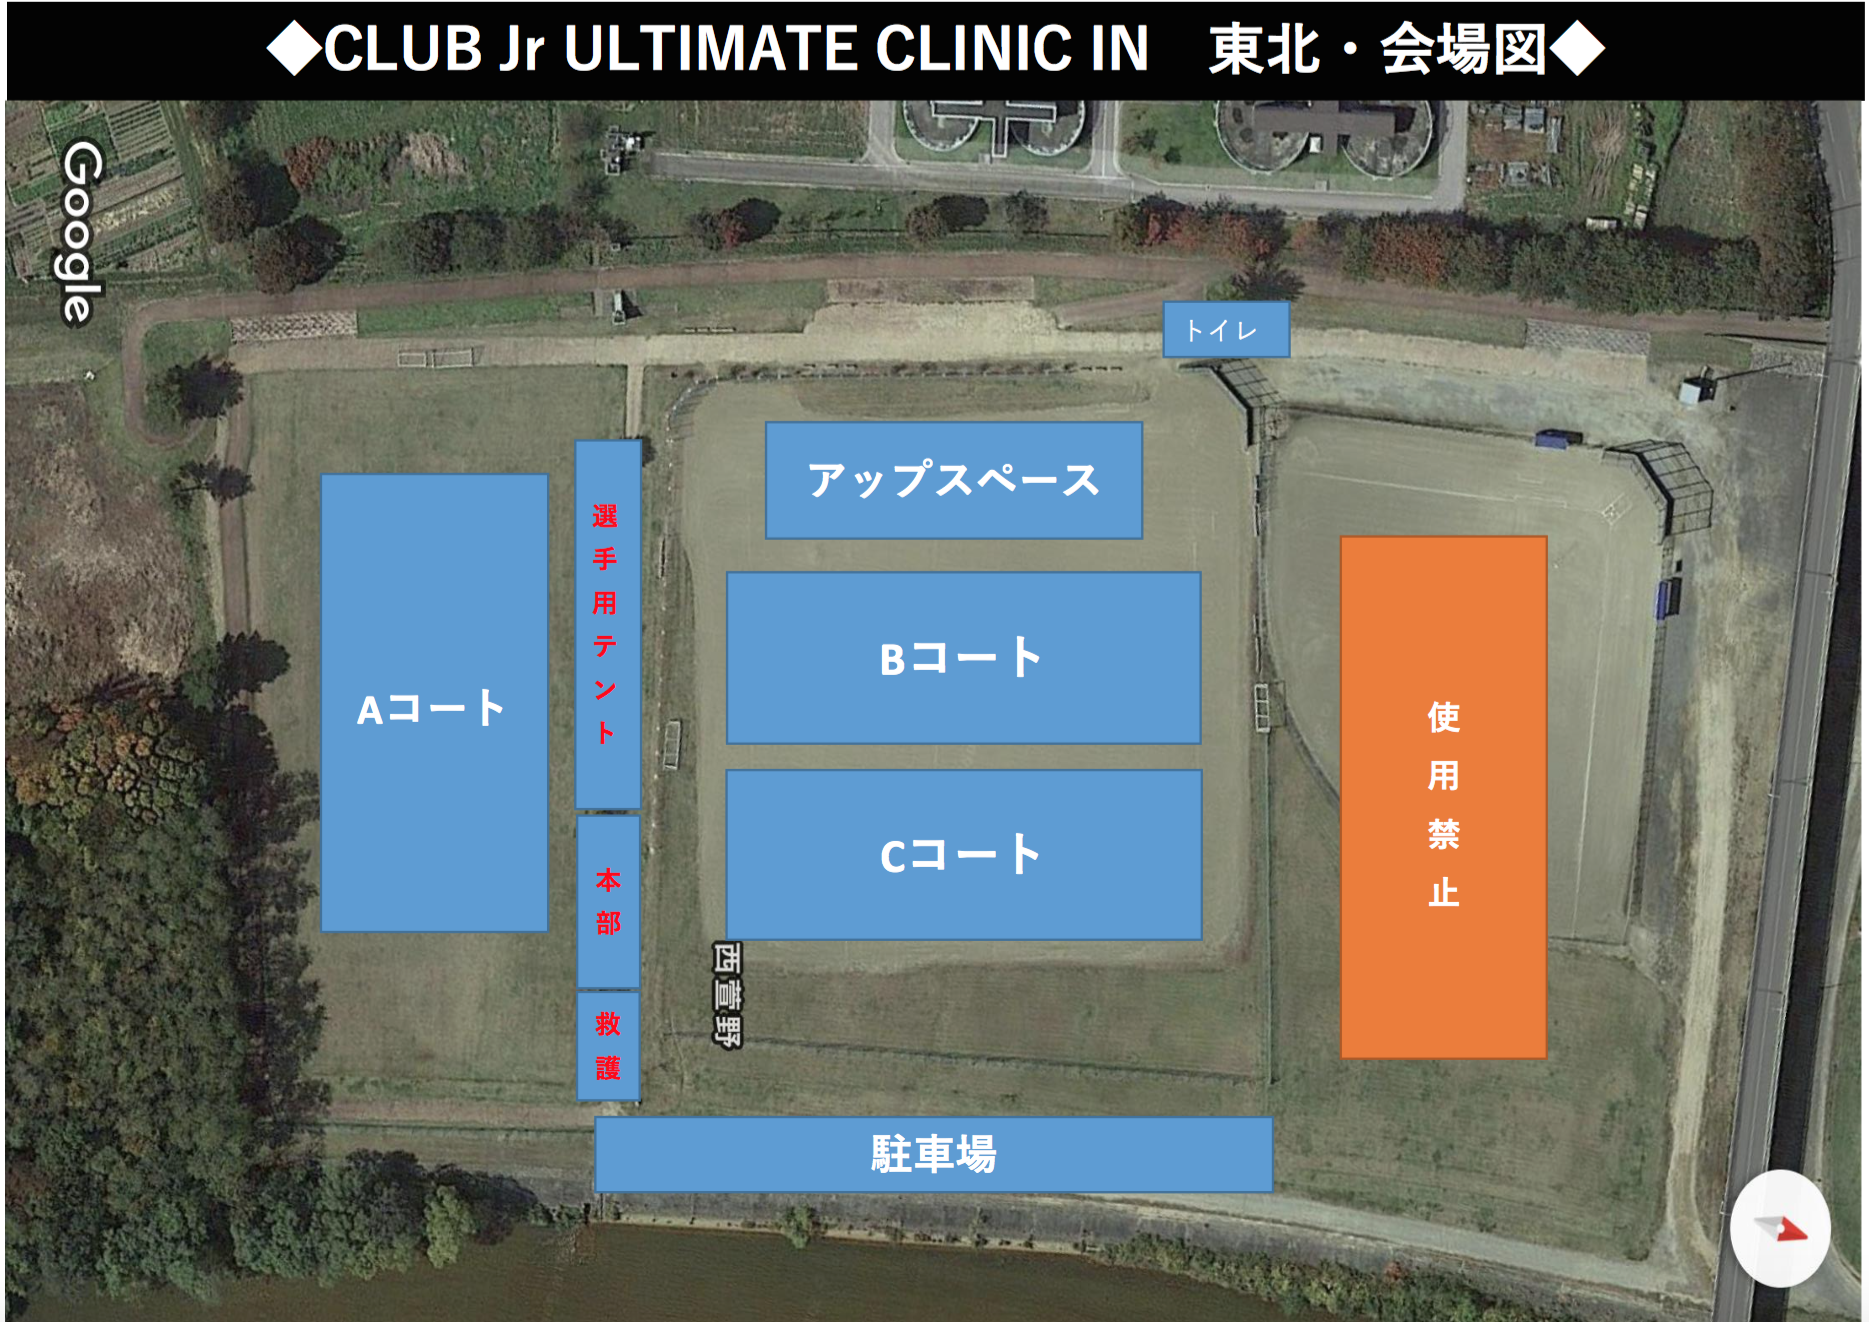 2018 CLUB Jr. Ultimate Clinic in kE}